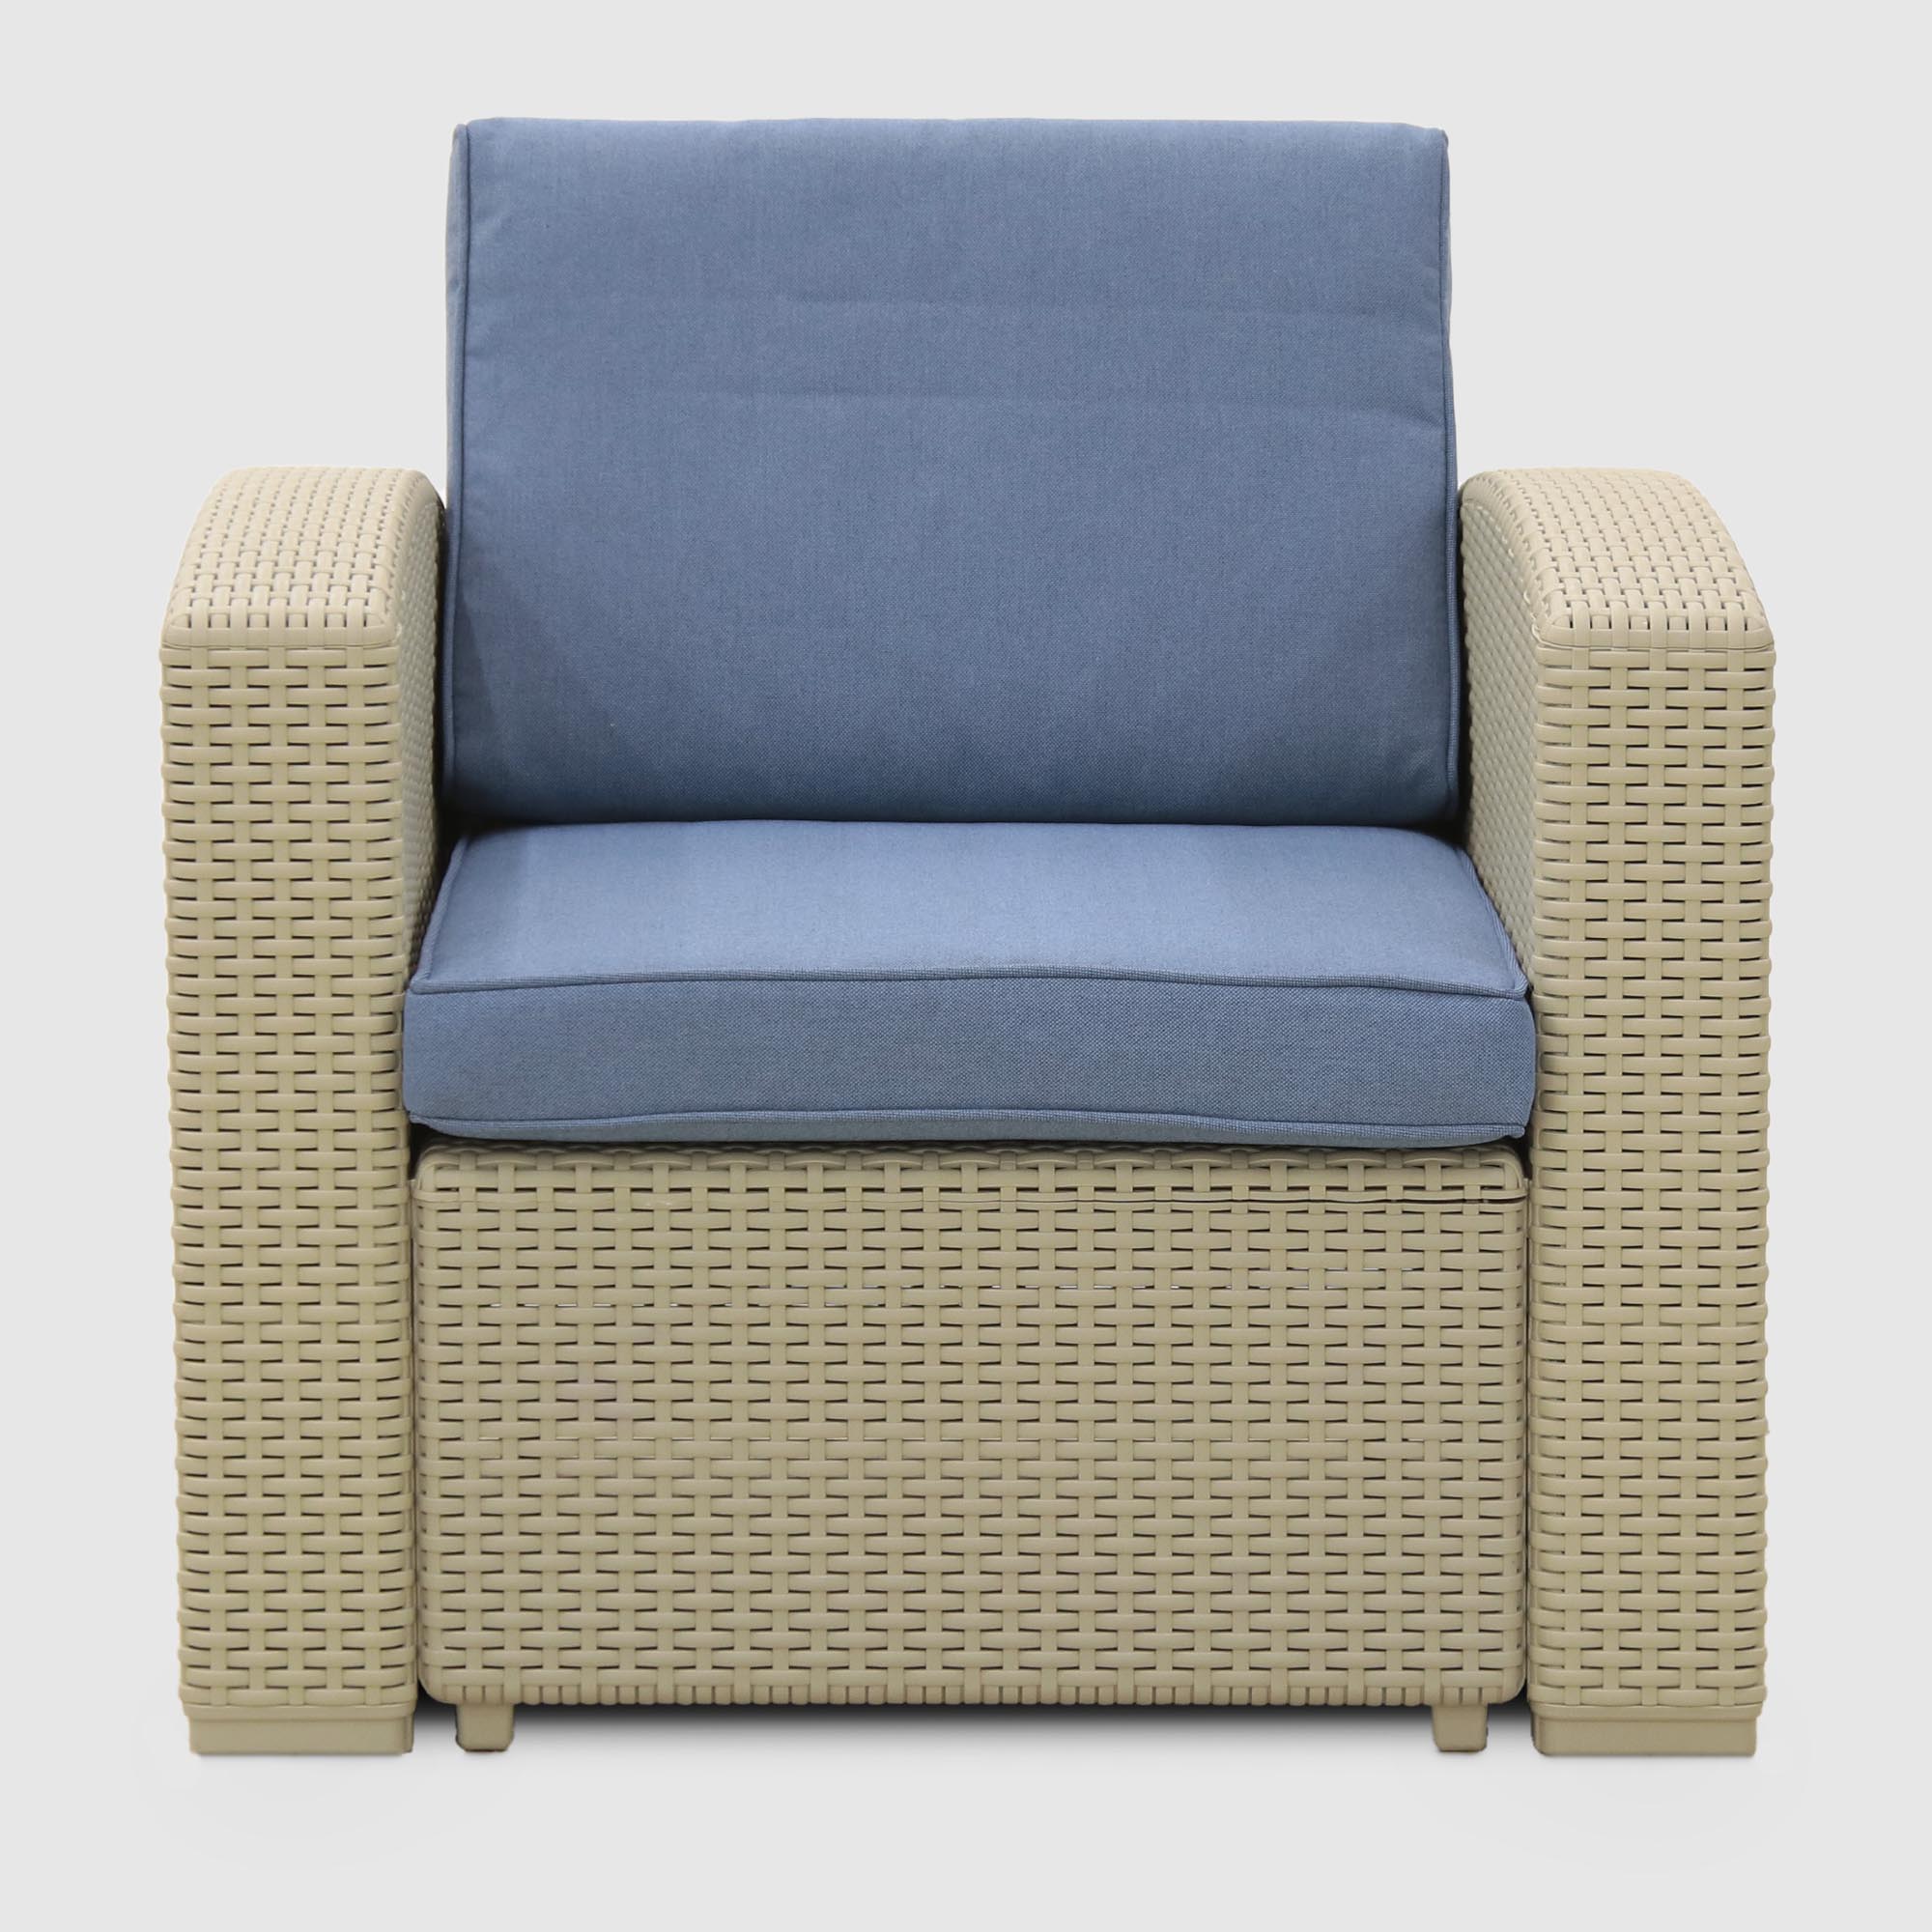 Комплект мебели LF стол+софа 3-х местная+2 кресла+тумбочка серый, цвет синий, размер 199x75x71 - фото 6